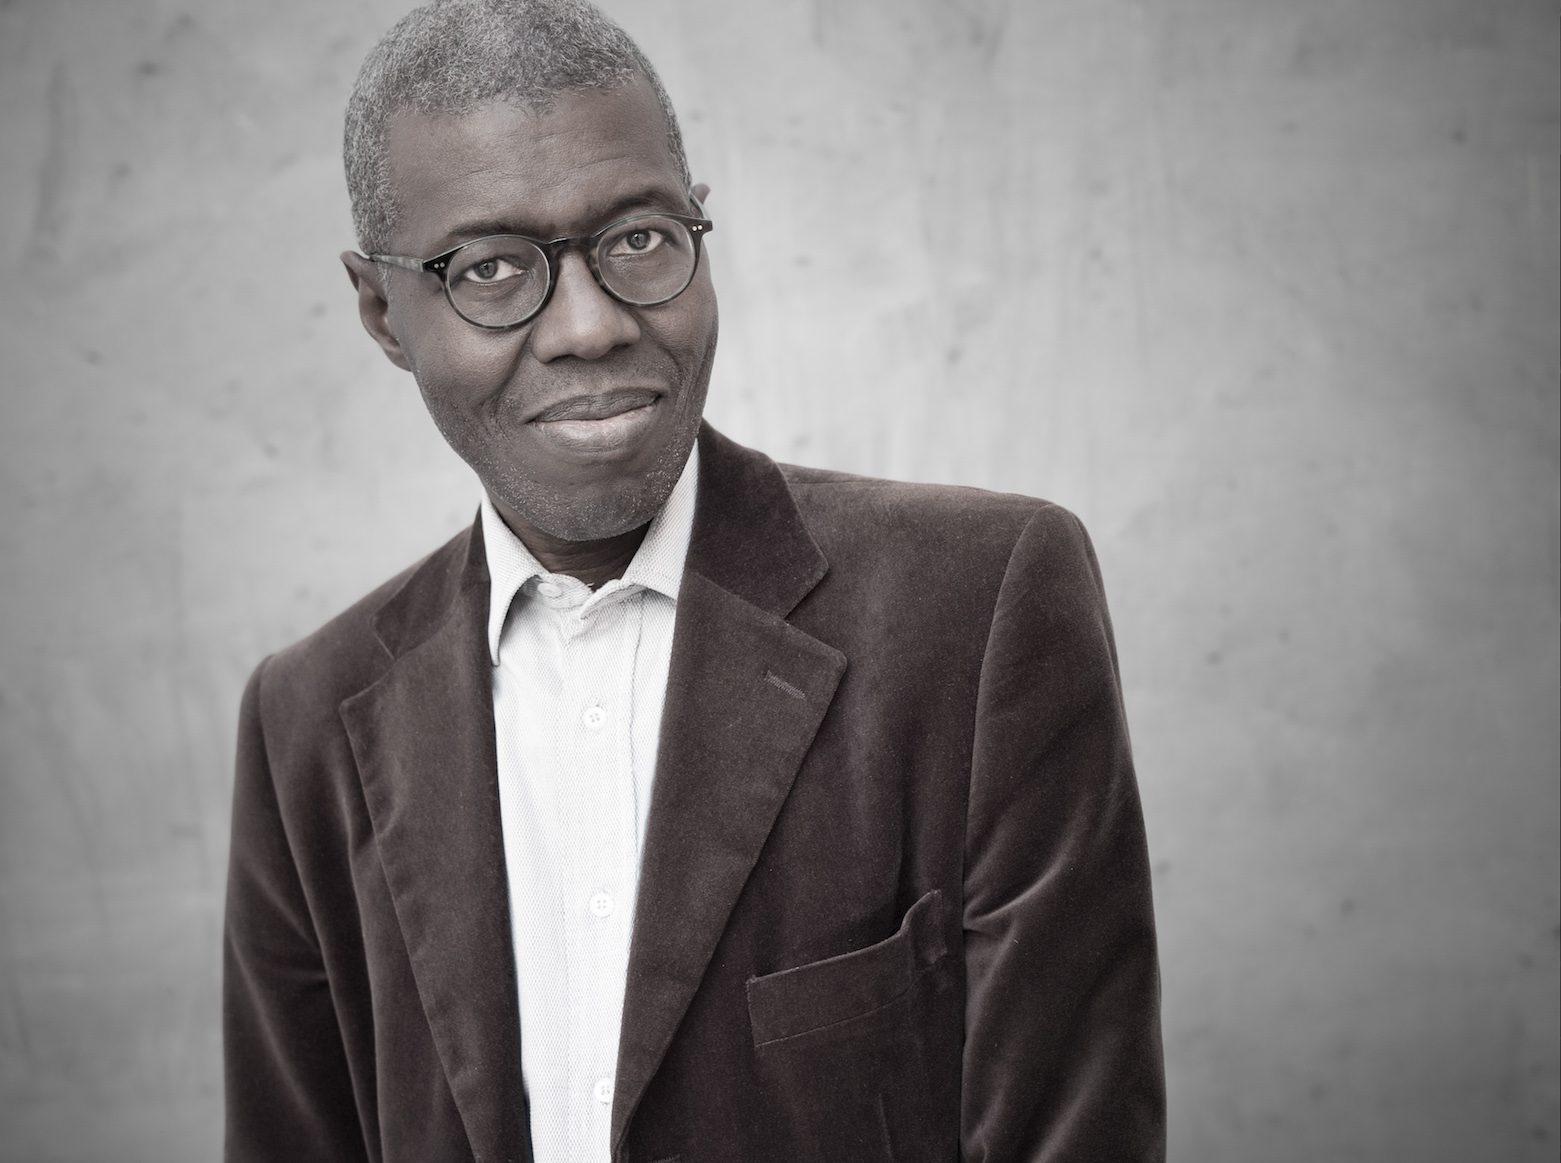 Souleymane Bachir Diagne, 2013. Courtesy of Antoine Tempé.

